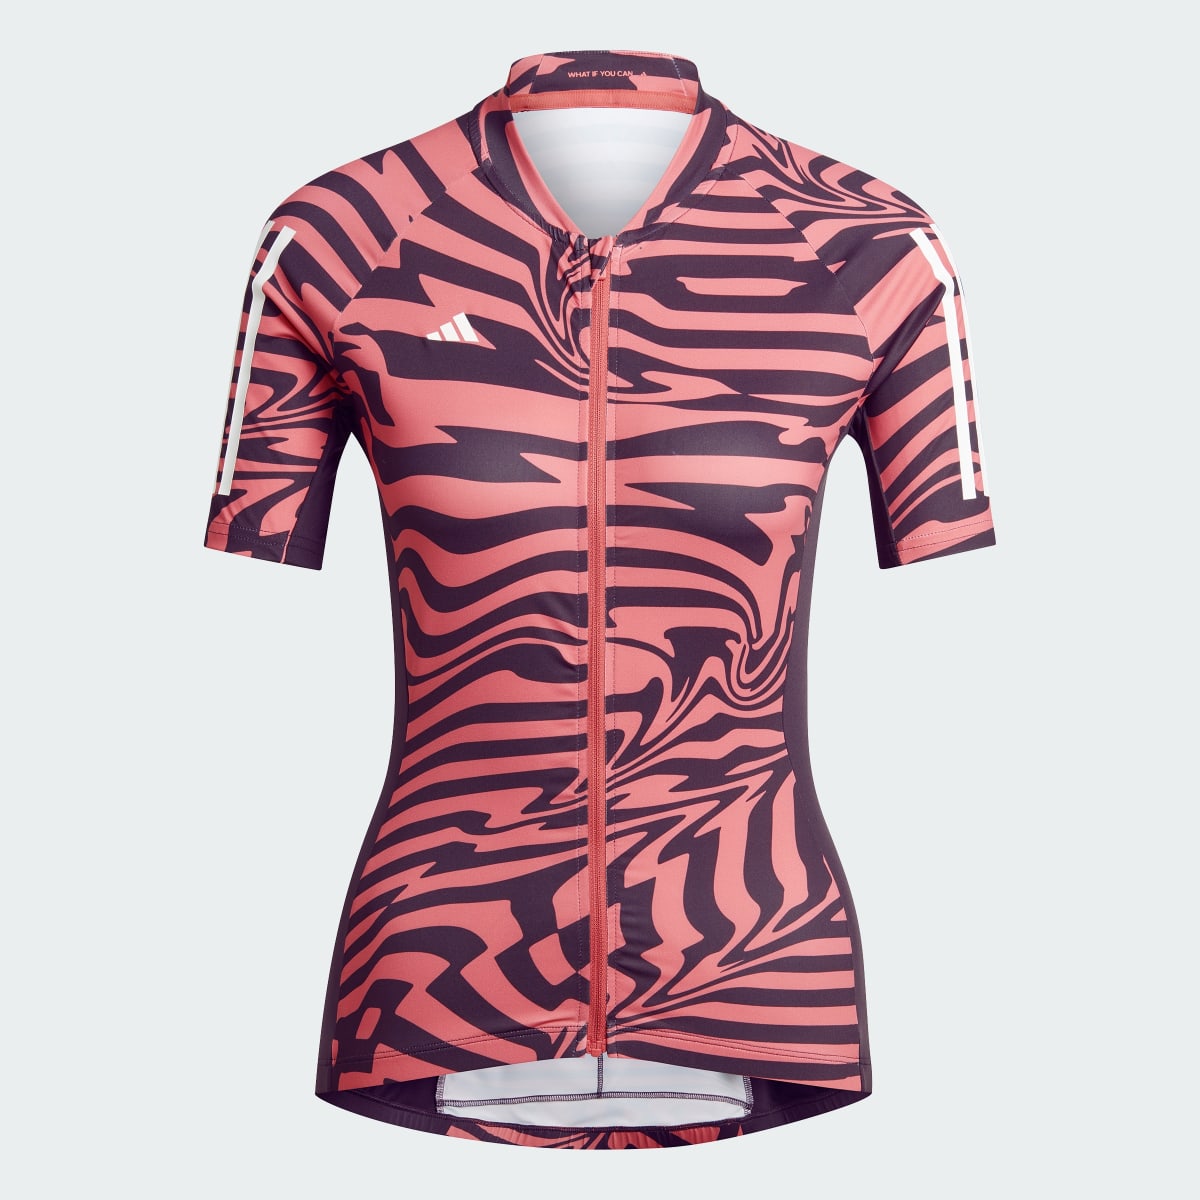 Adidas Essentials 3-Stripes Fast Zebra Cycling Jersey. 5